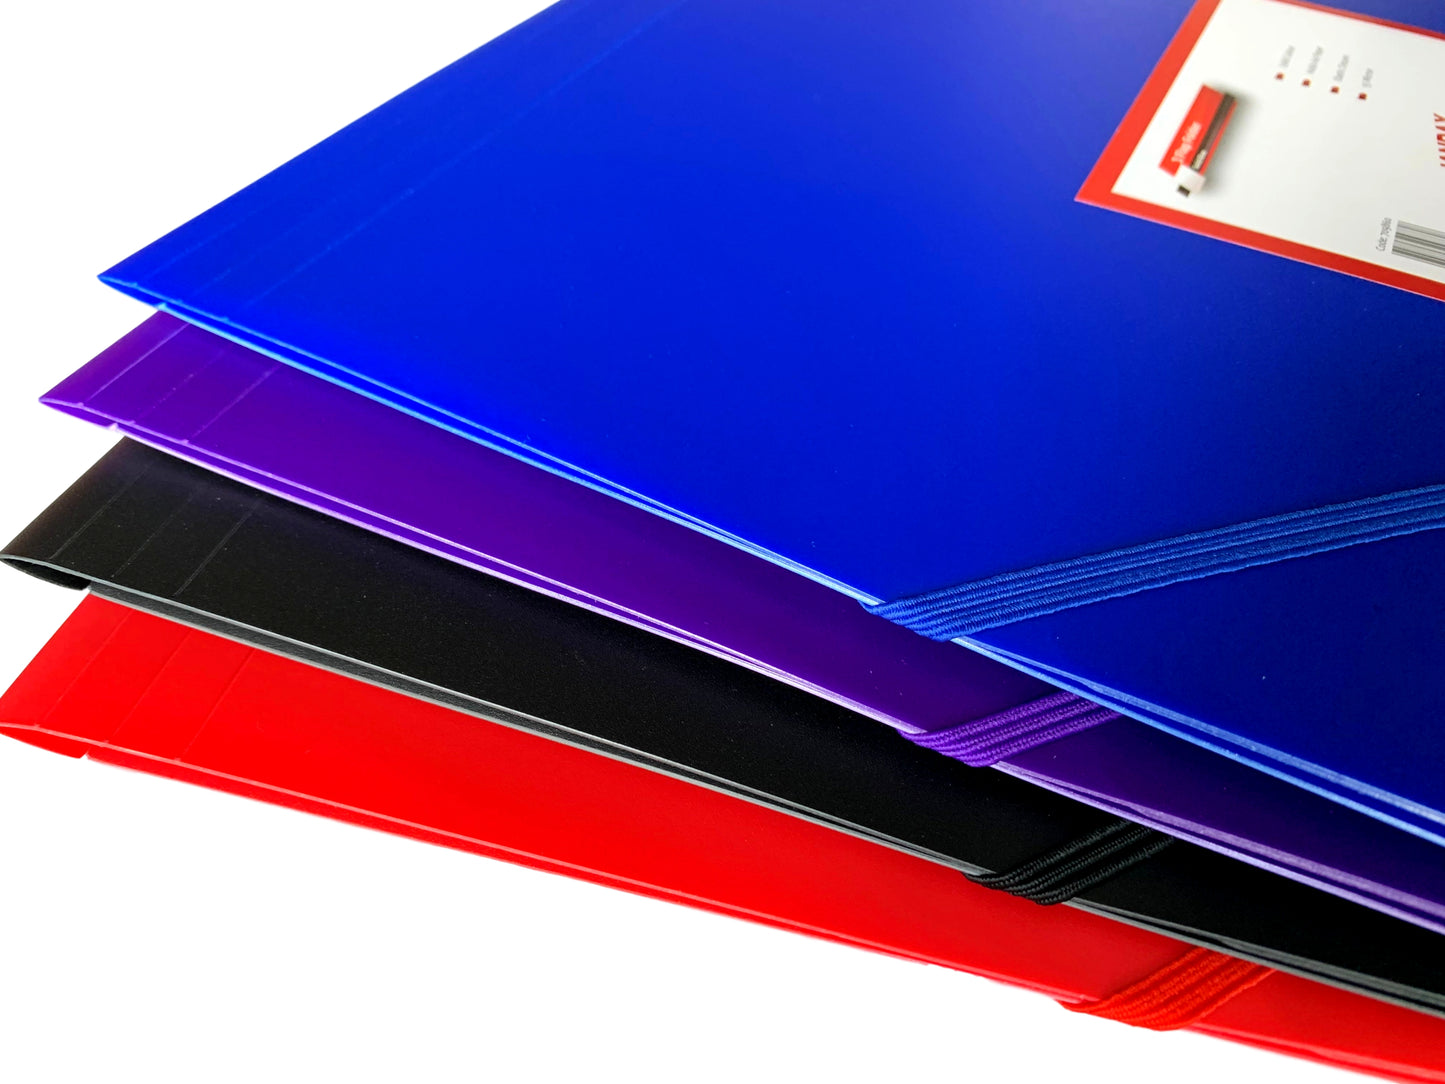 Janrax A4 Blue 3 Flap Folder with Elasticated Closure